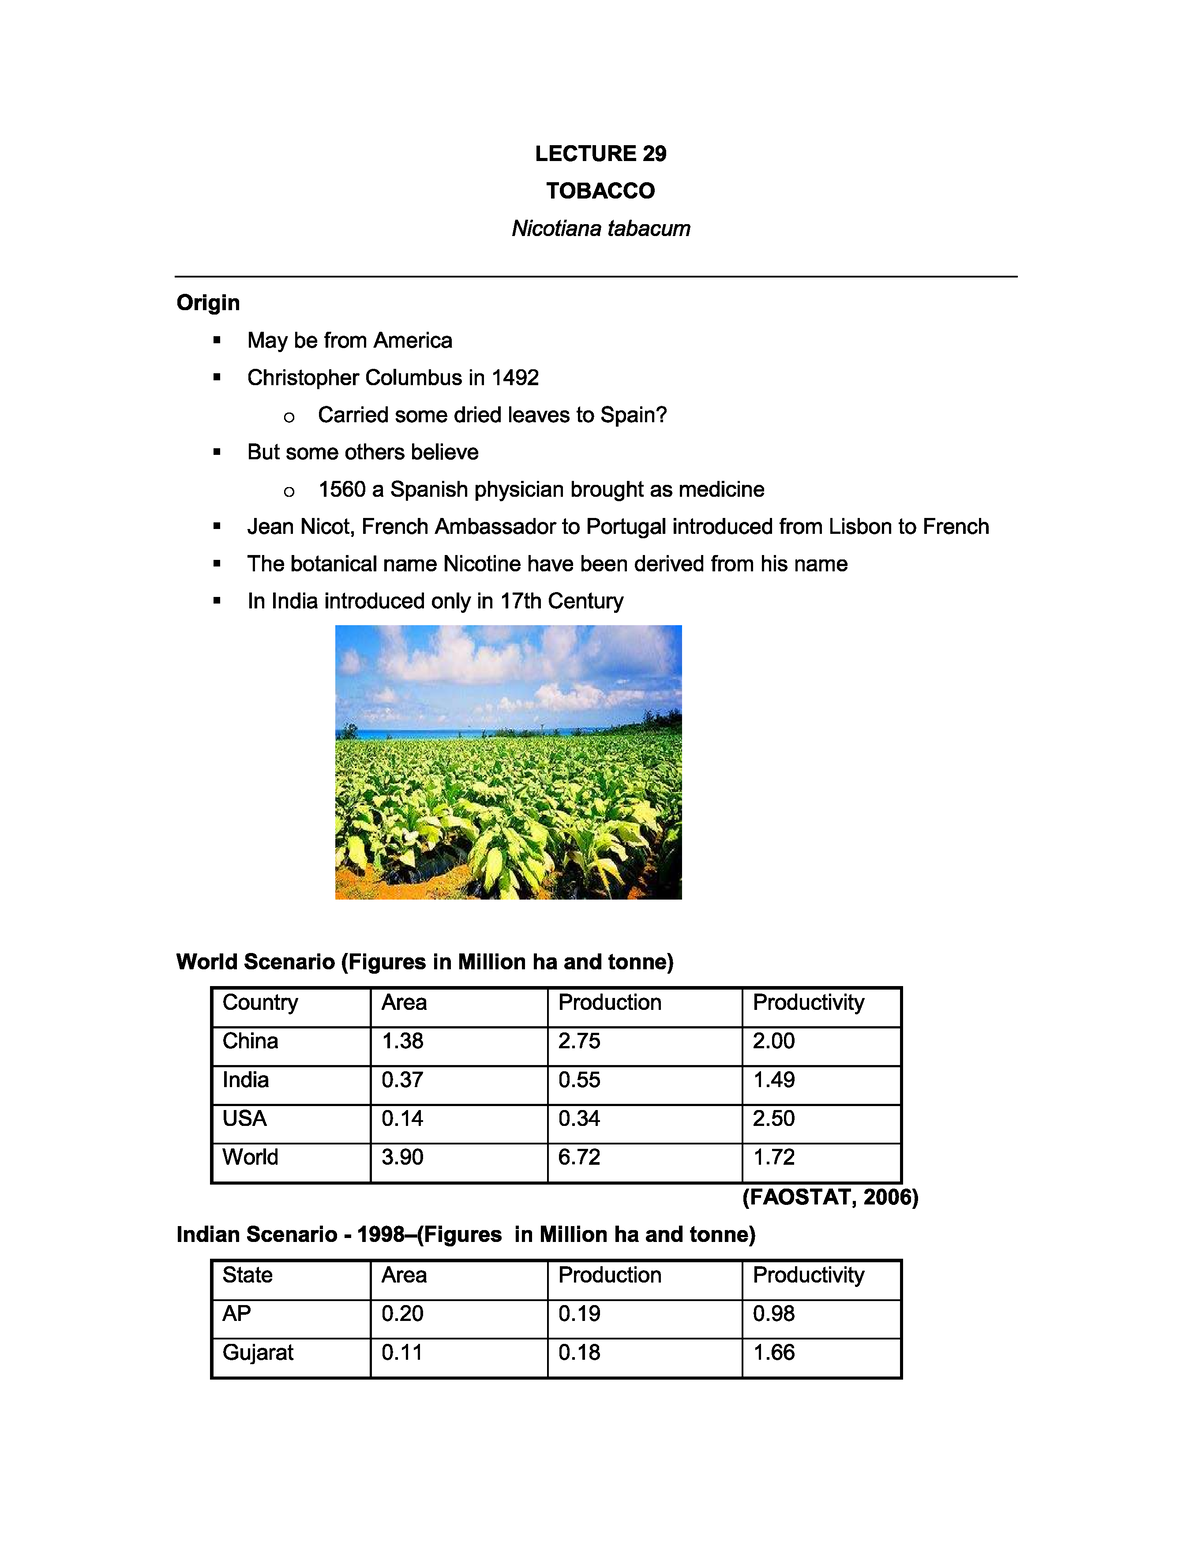 field pea research paper